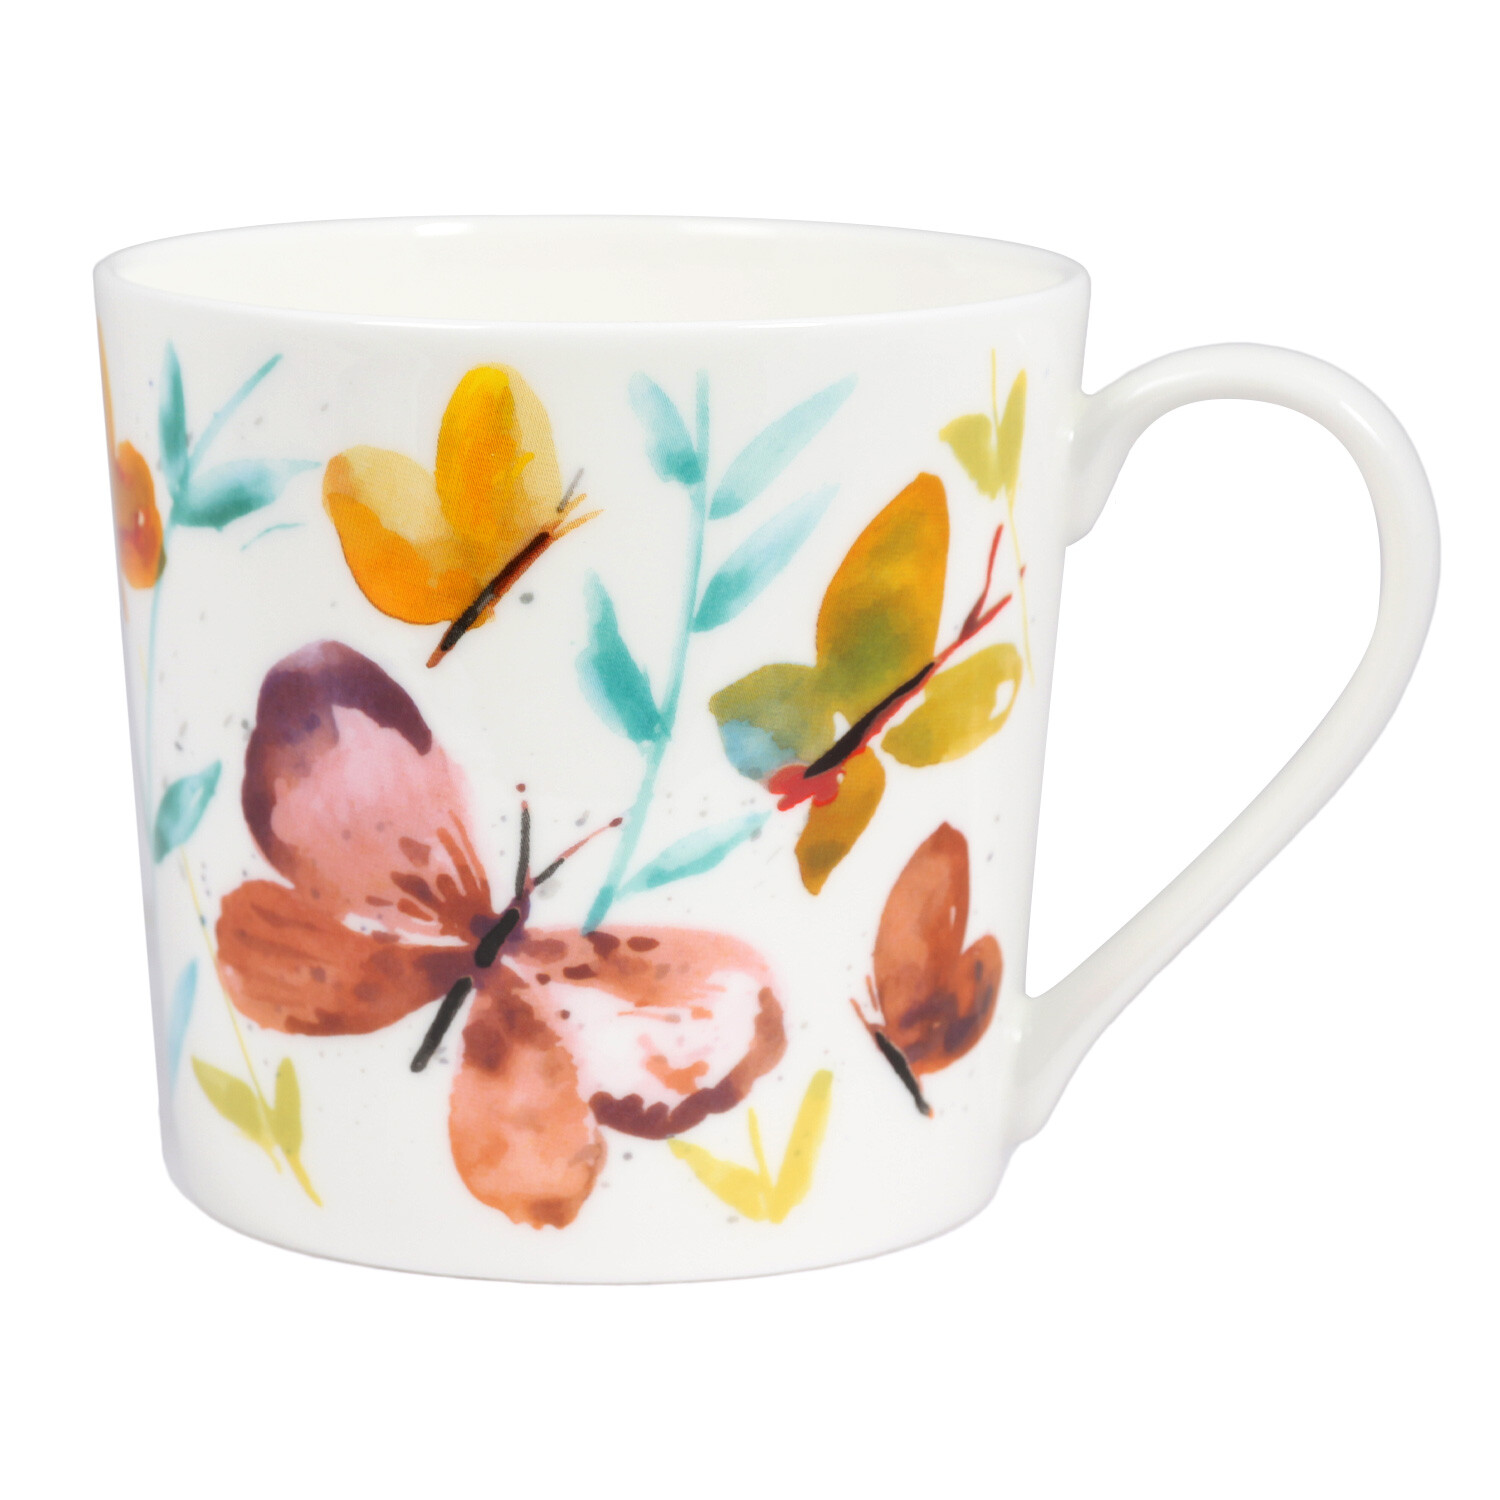 Watercolour Butterflies Mug - White Image 1